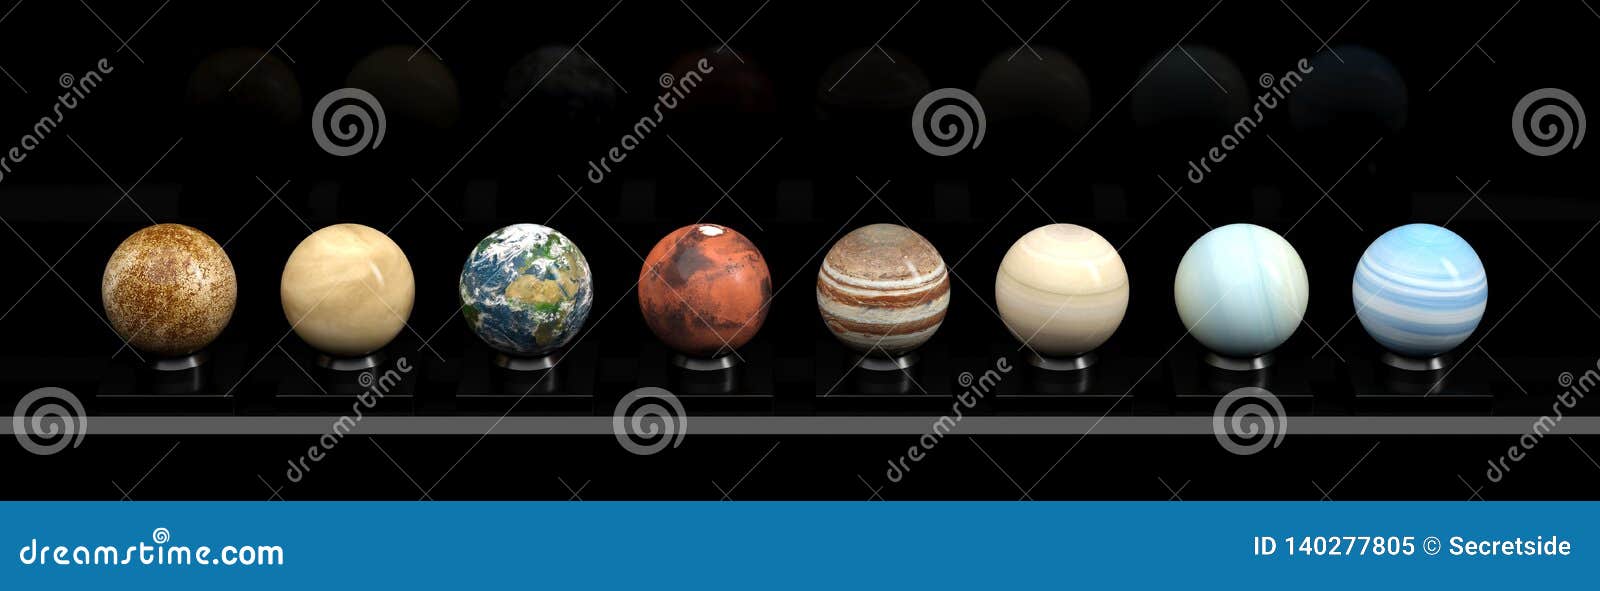 Solar System Planets on Black Background Stock Illustration